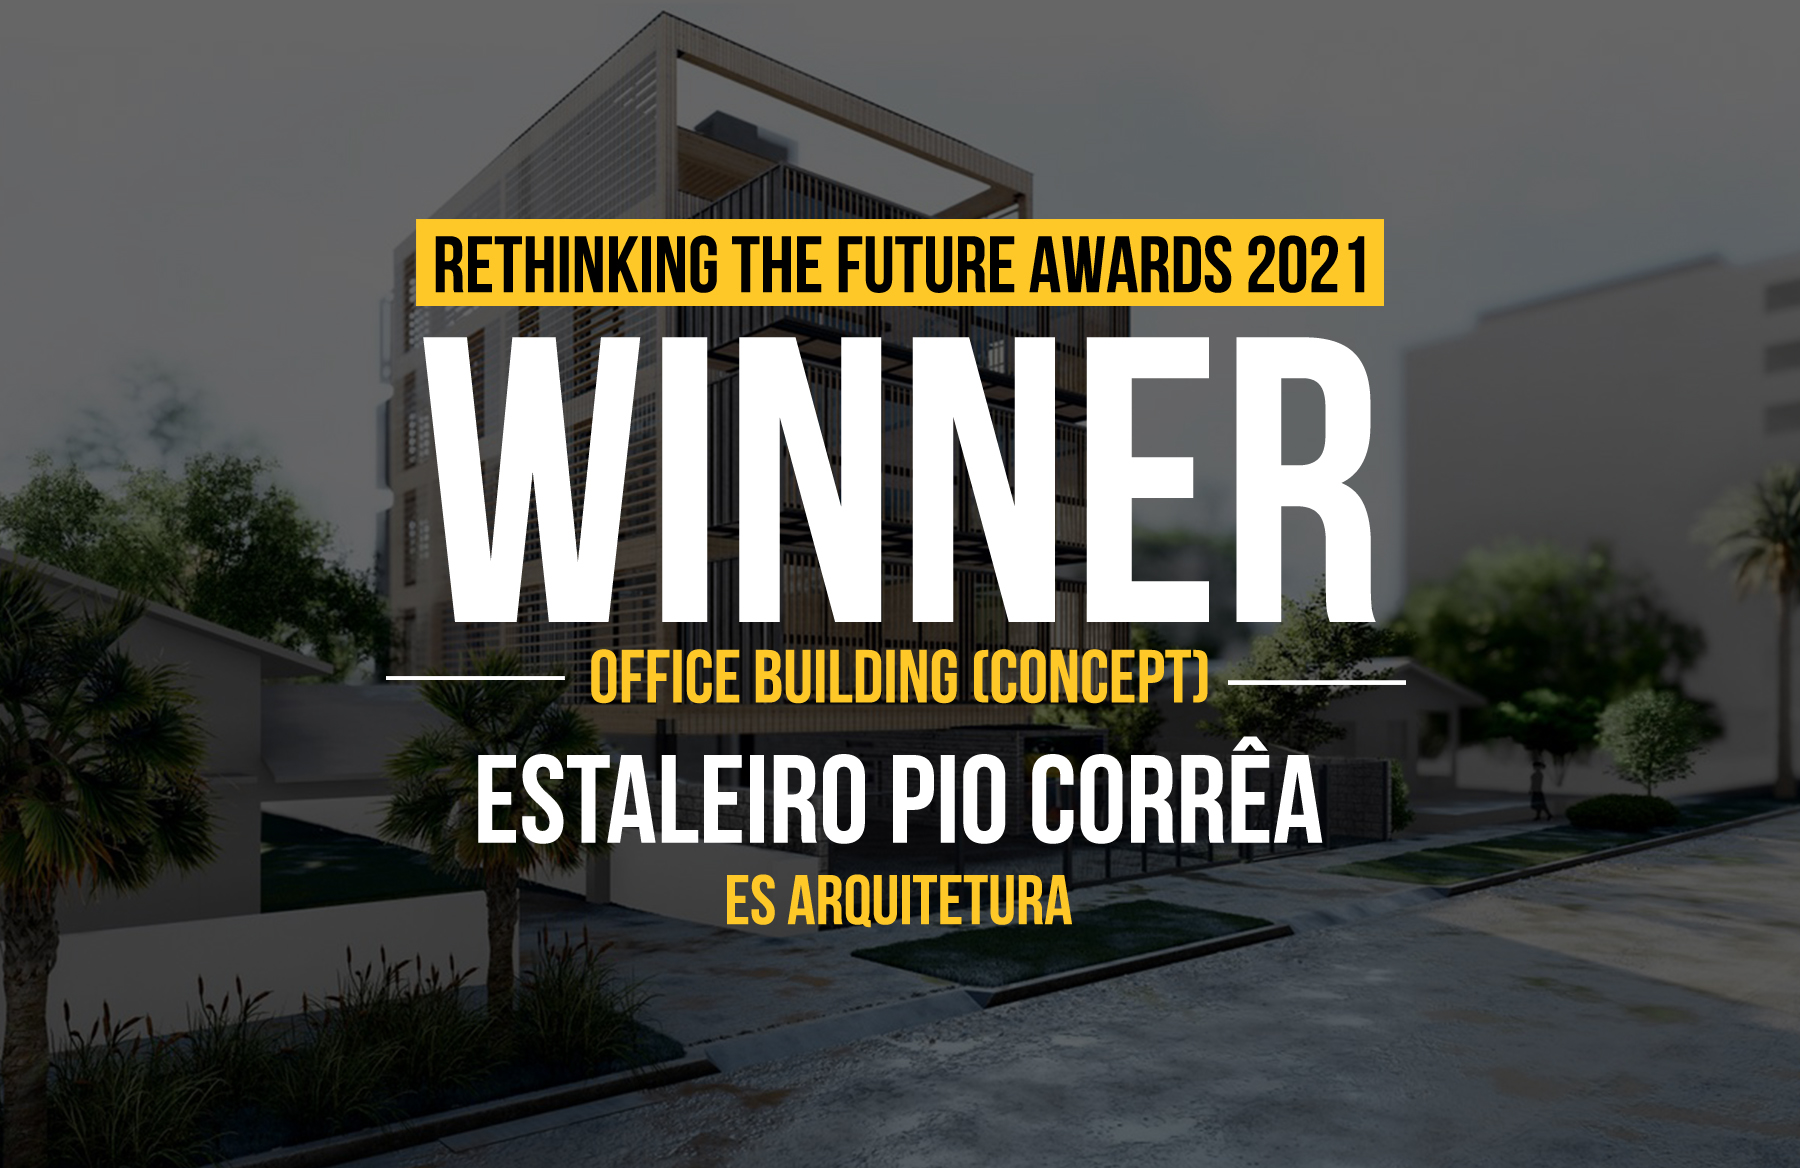 Architecture Awards - Estaleiro Pio Corrêa - Design Awards